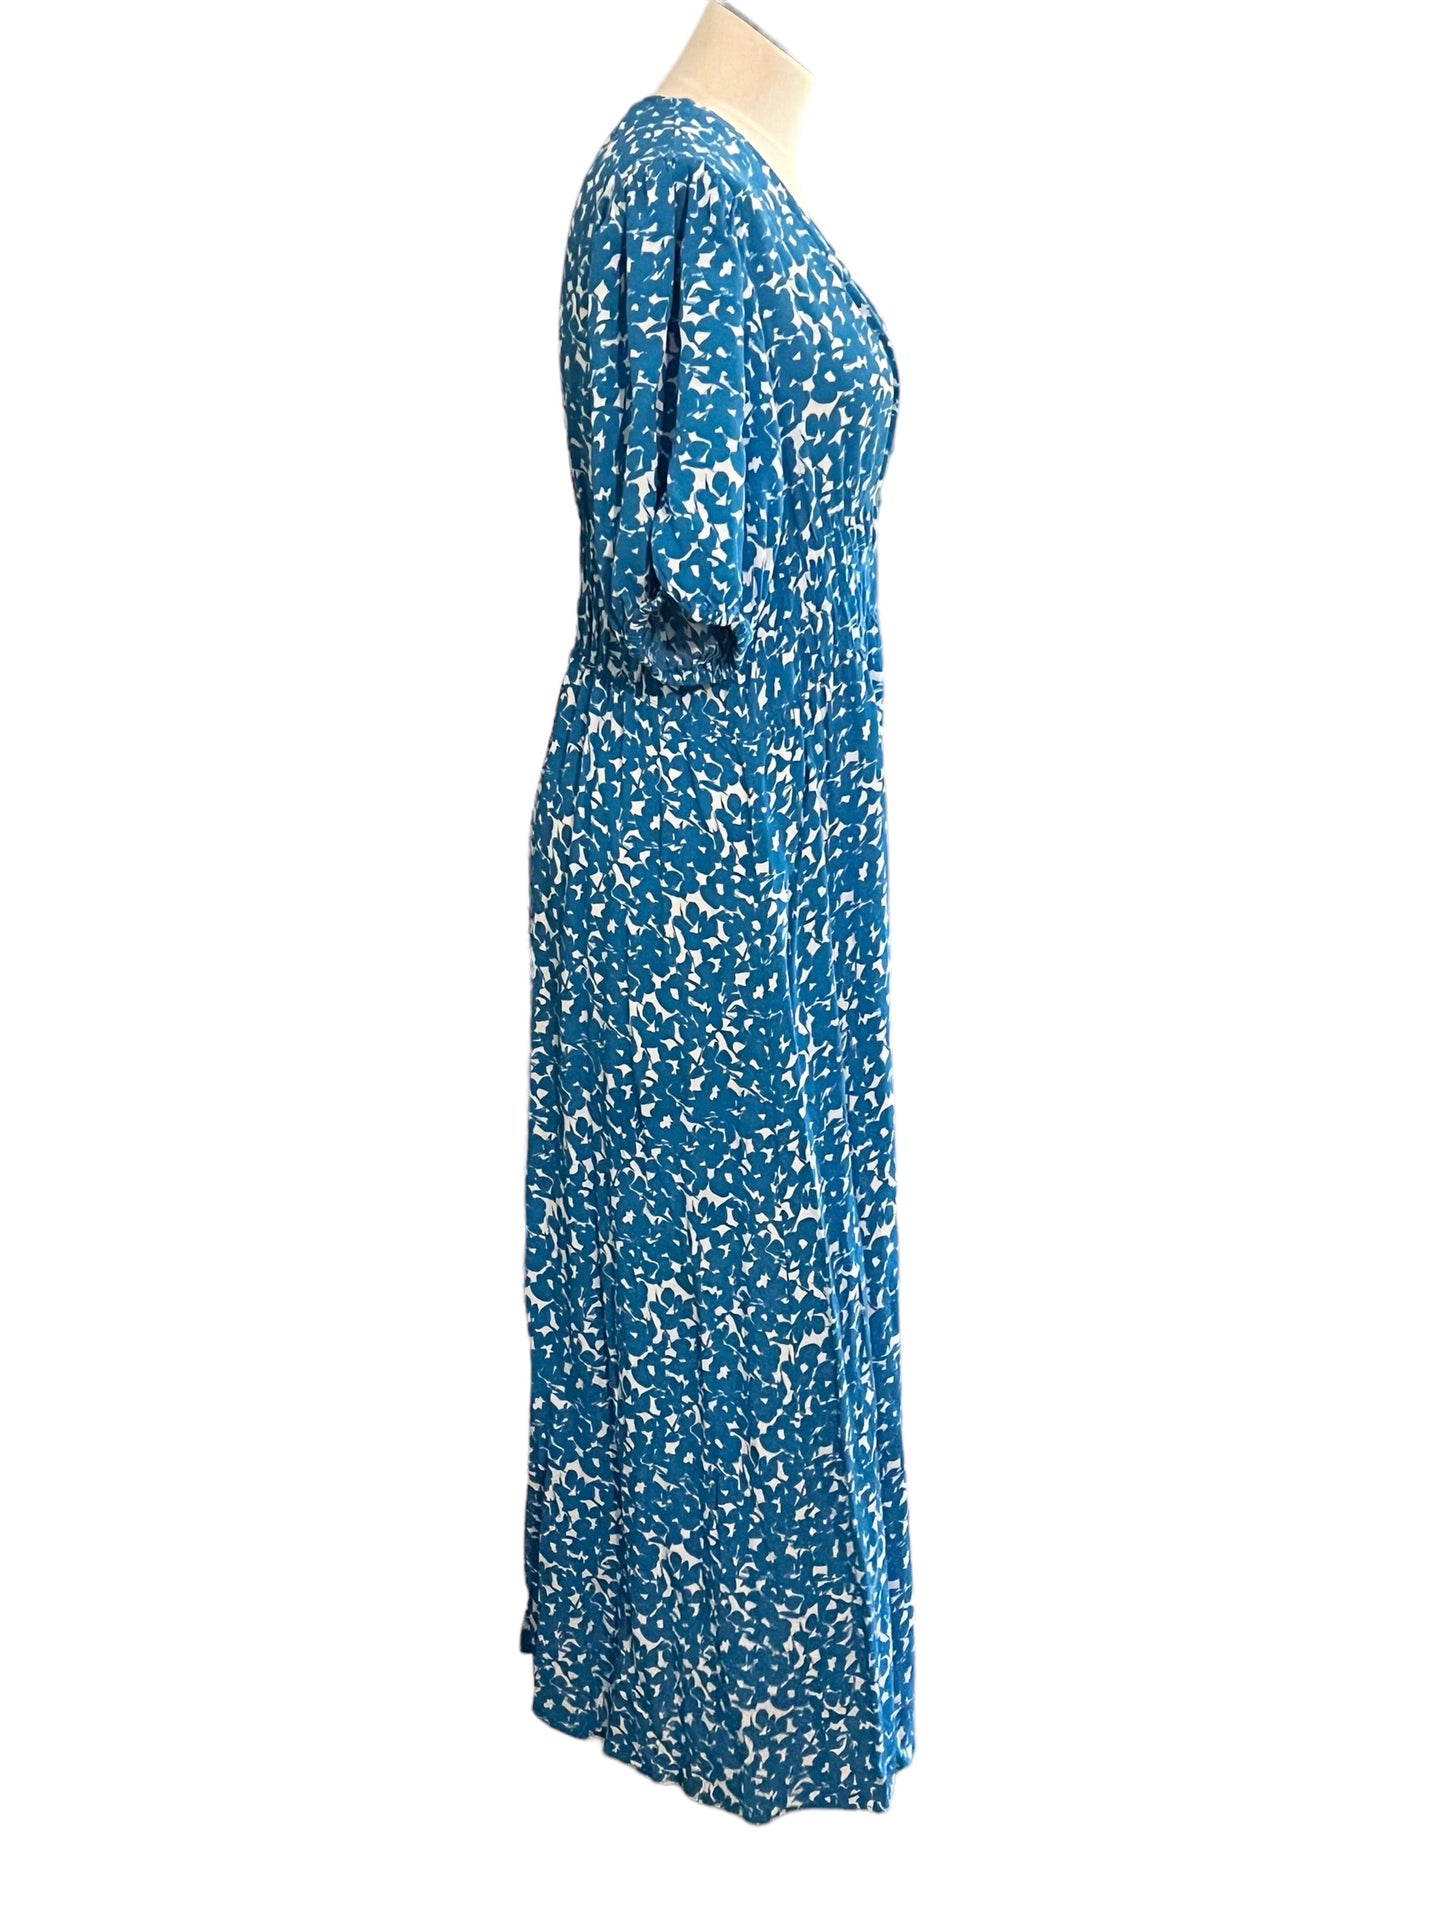 Zara Size M Blue Print Dress